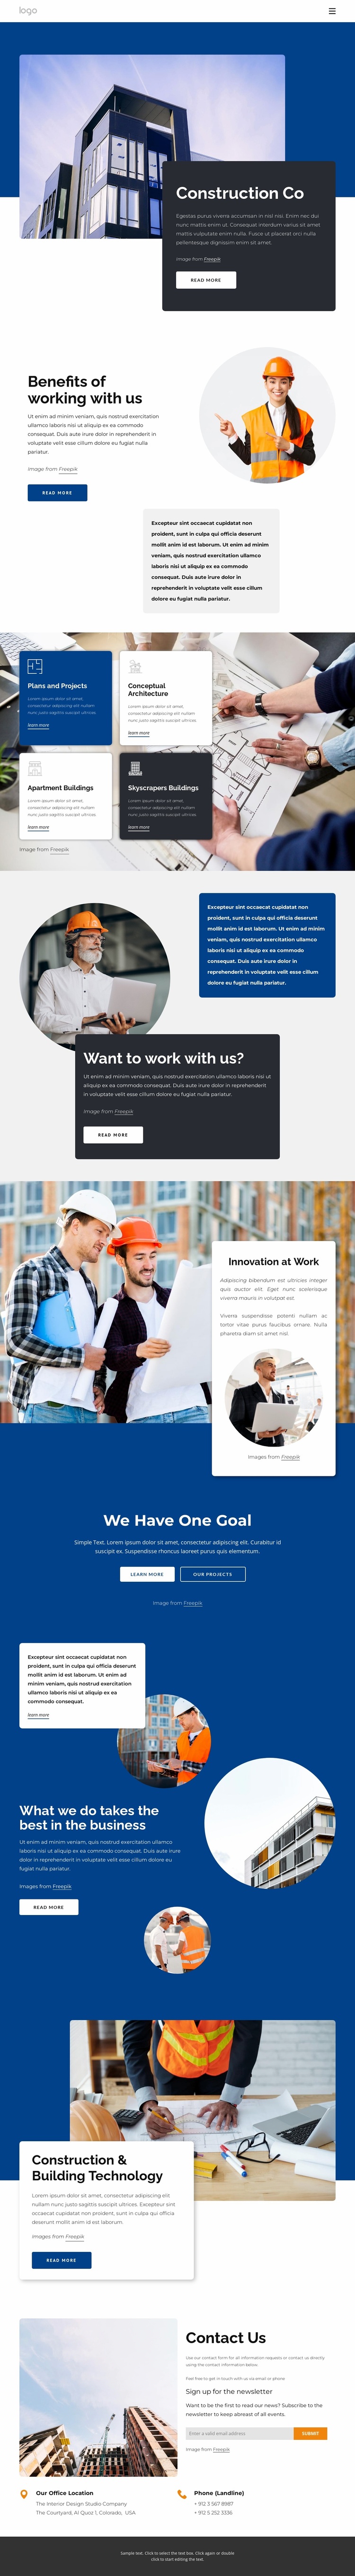 Construction co Website Design